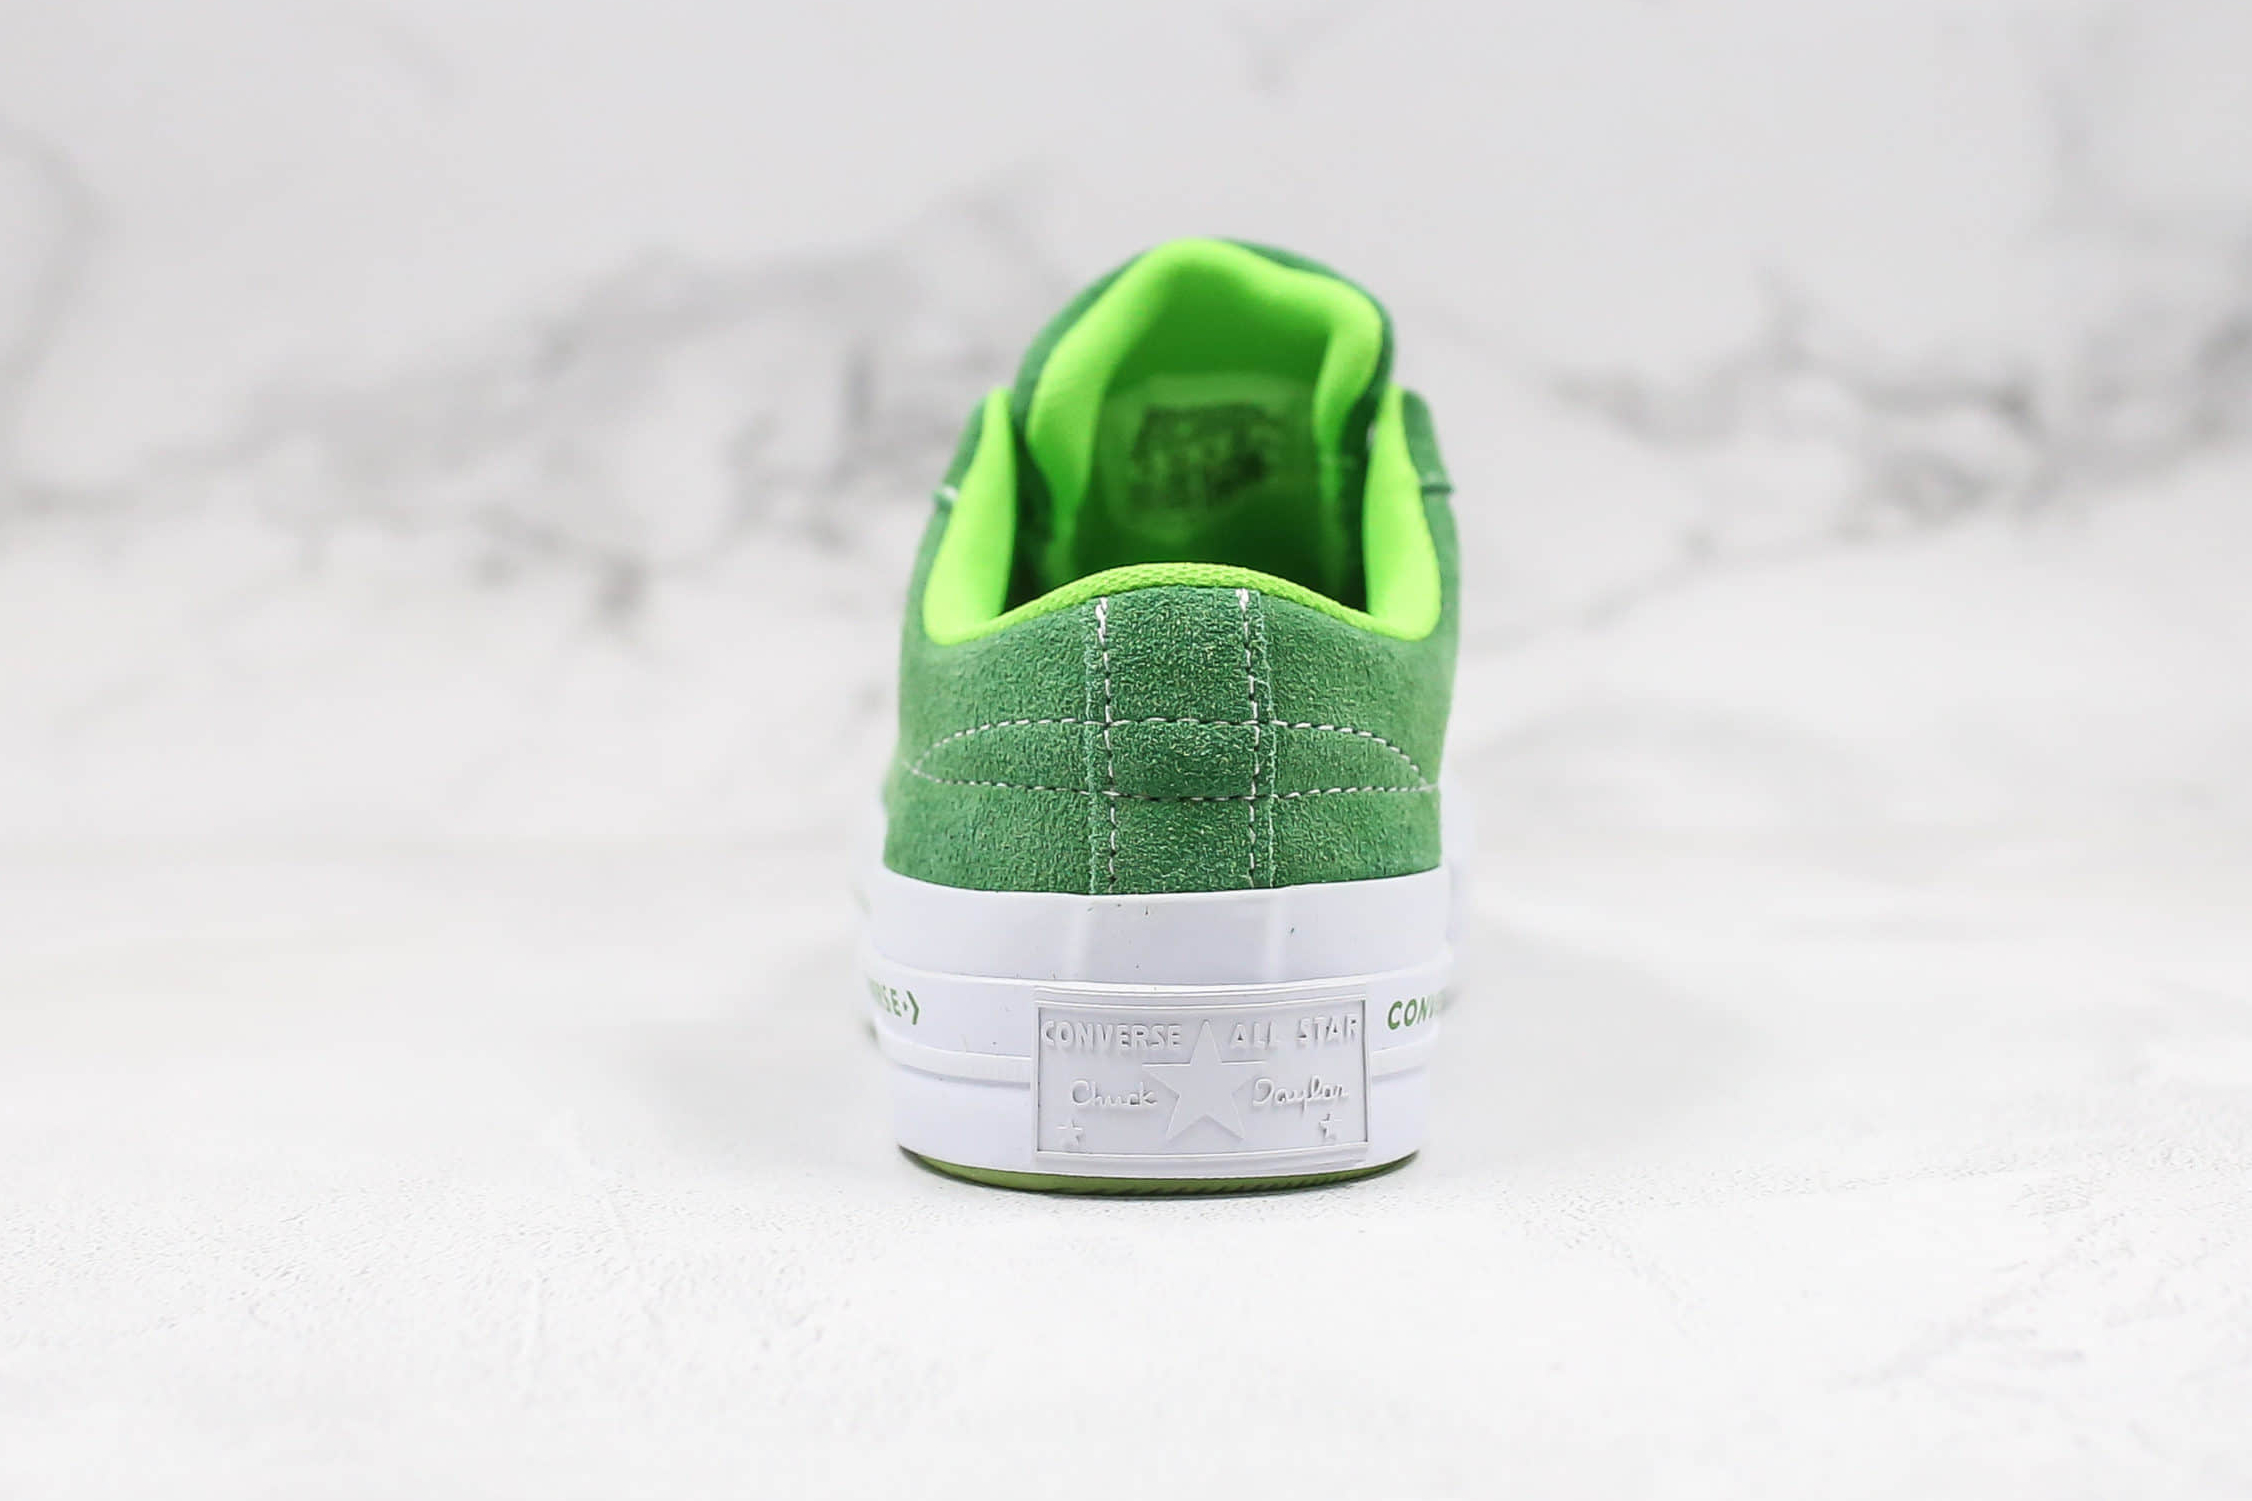 Converse One Star Low 'Mint Green' 159816C - Stylish & Versatile Footwear